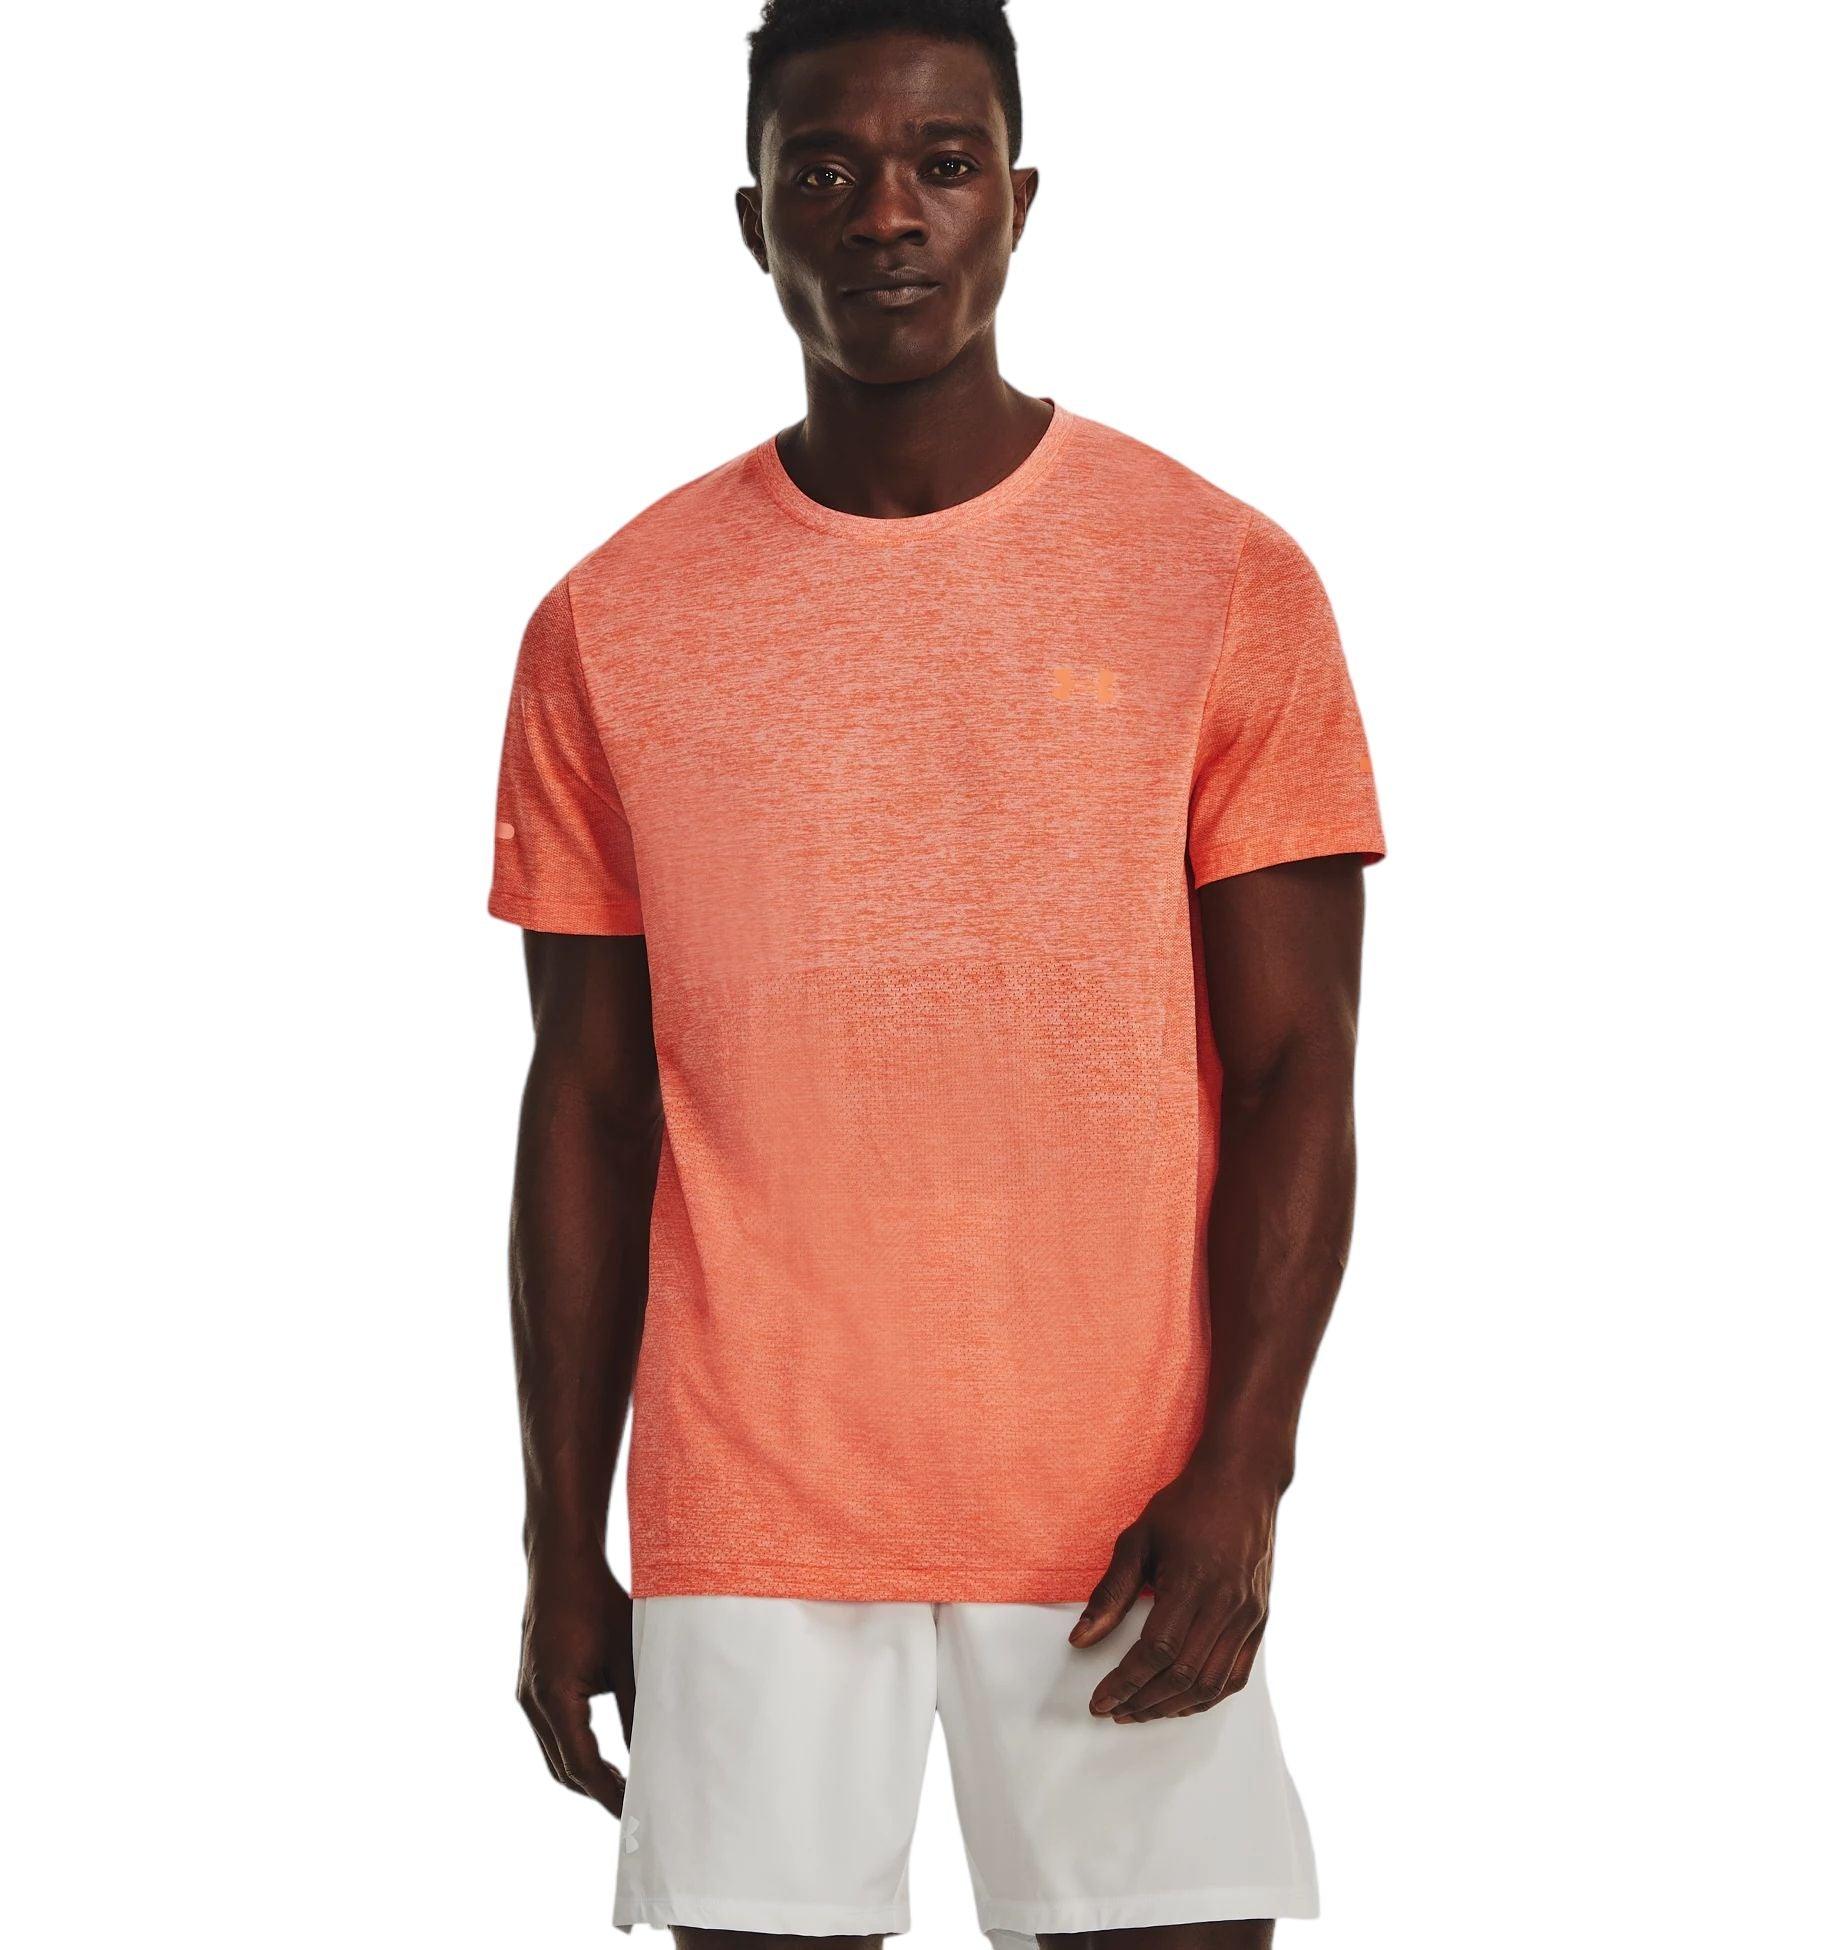 Under Armour | T-shirt Seamless Uomo Frosted Orange/Reflective - Fabbrica Ski Sises